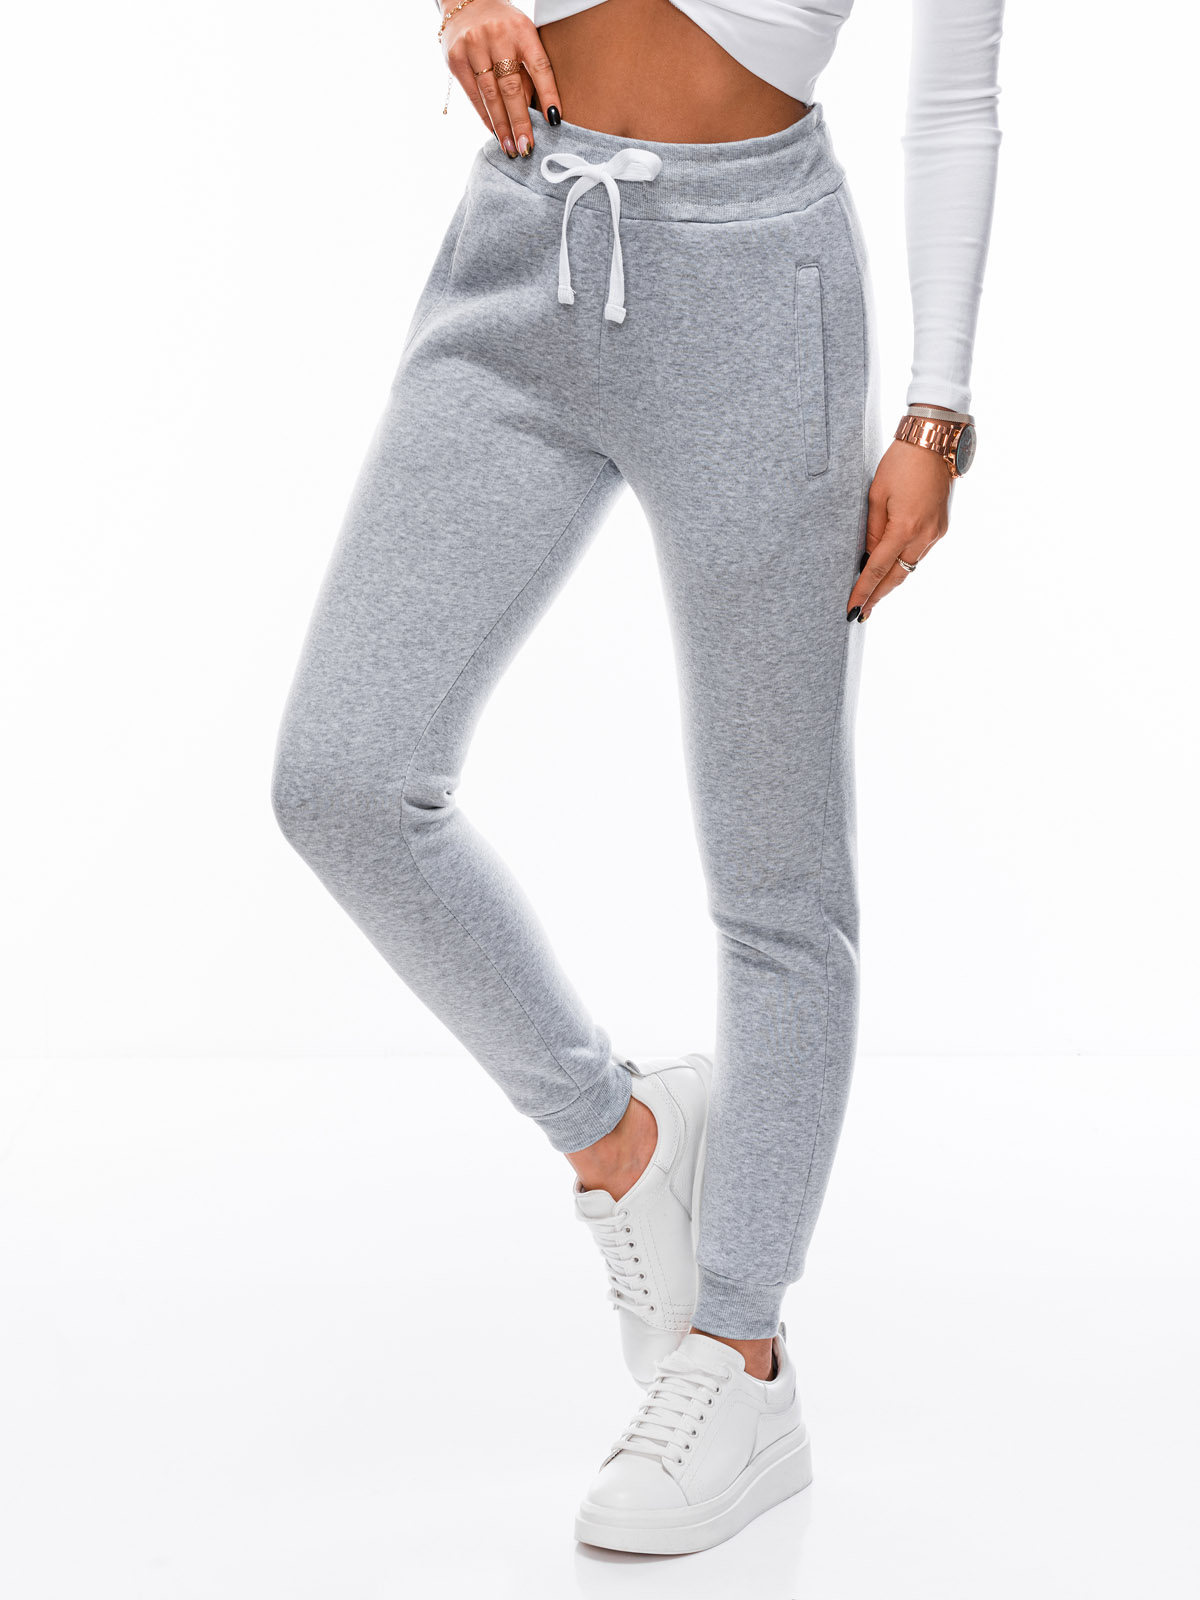 Women's sweatpants PLR070 - light grey melange